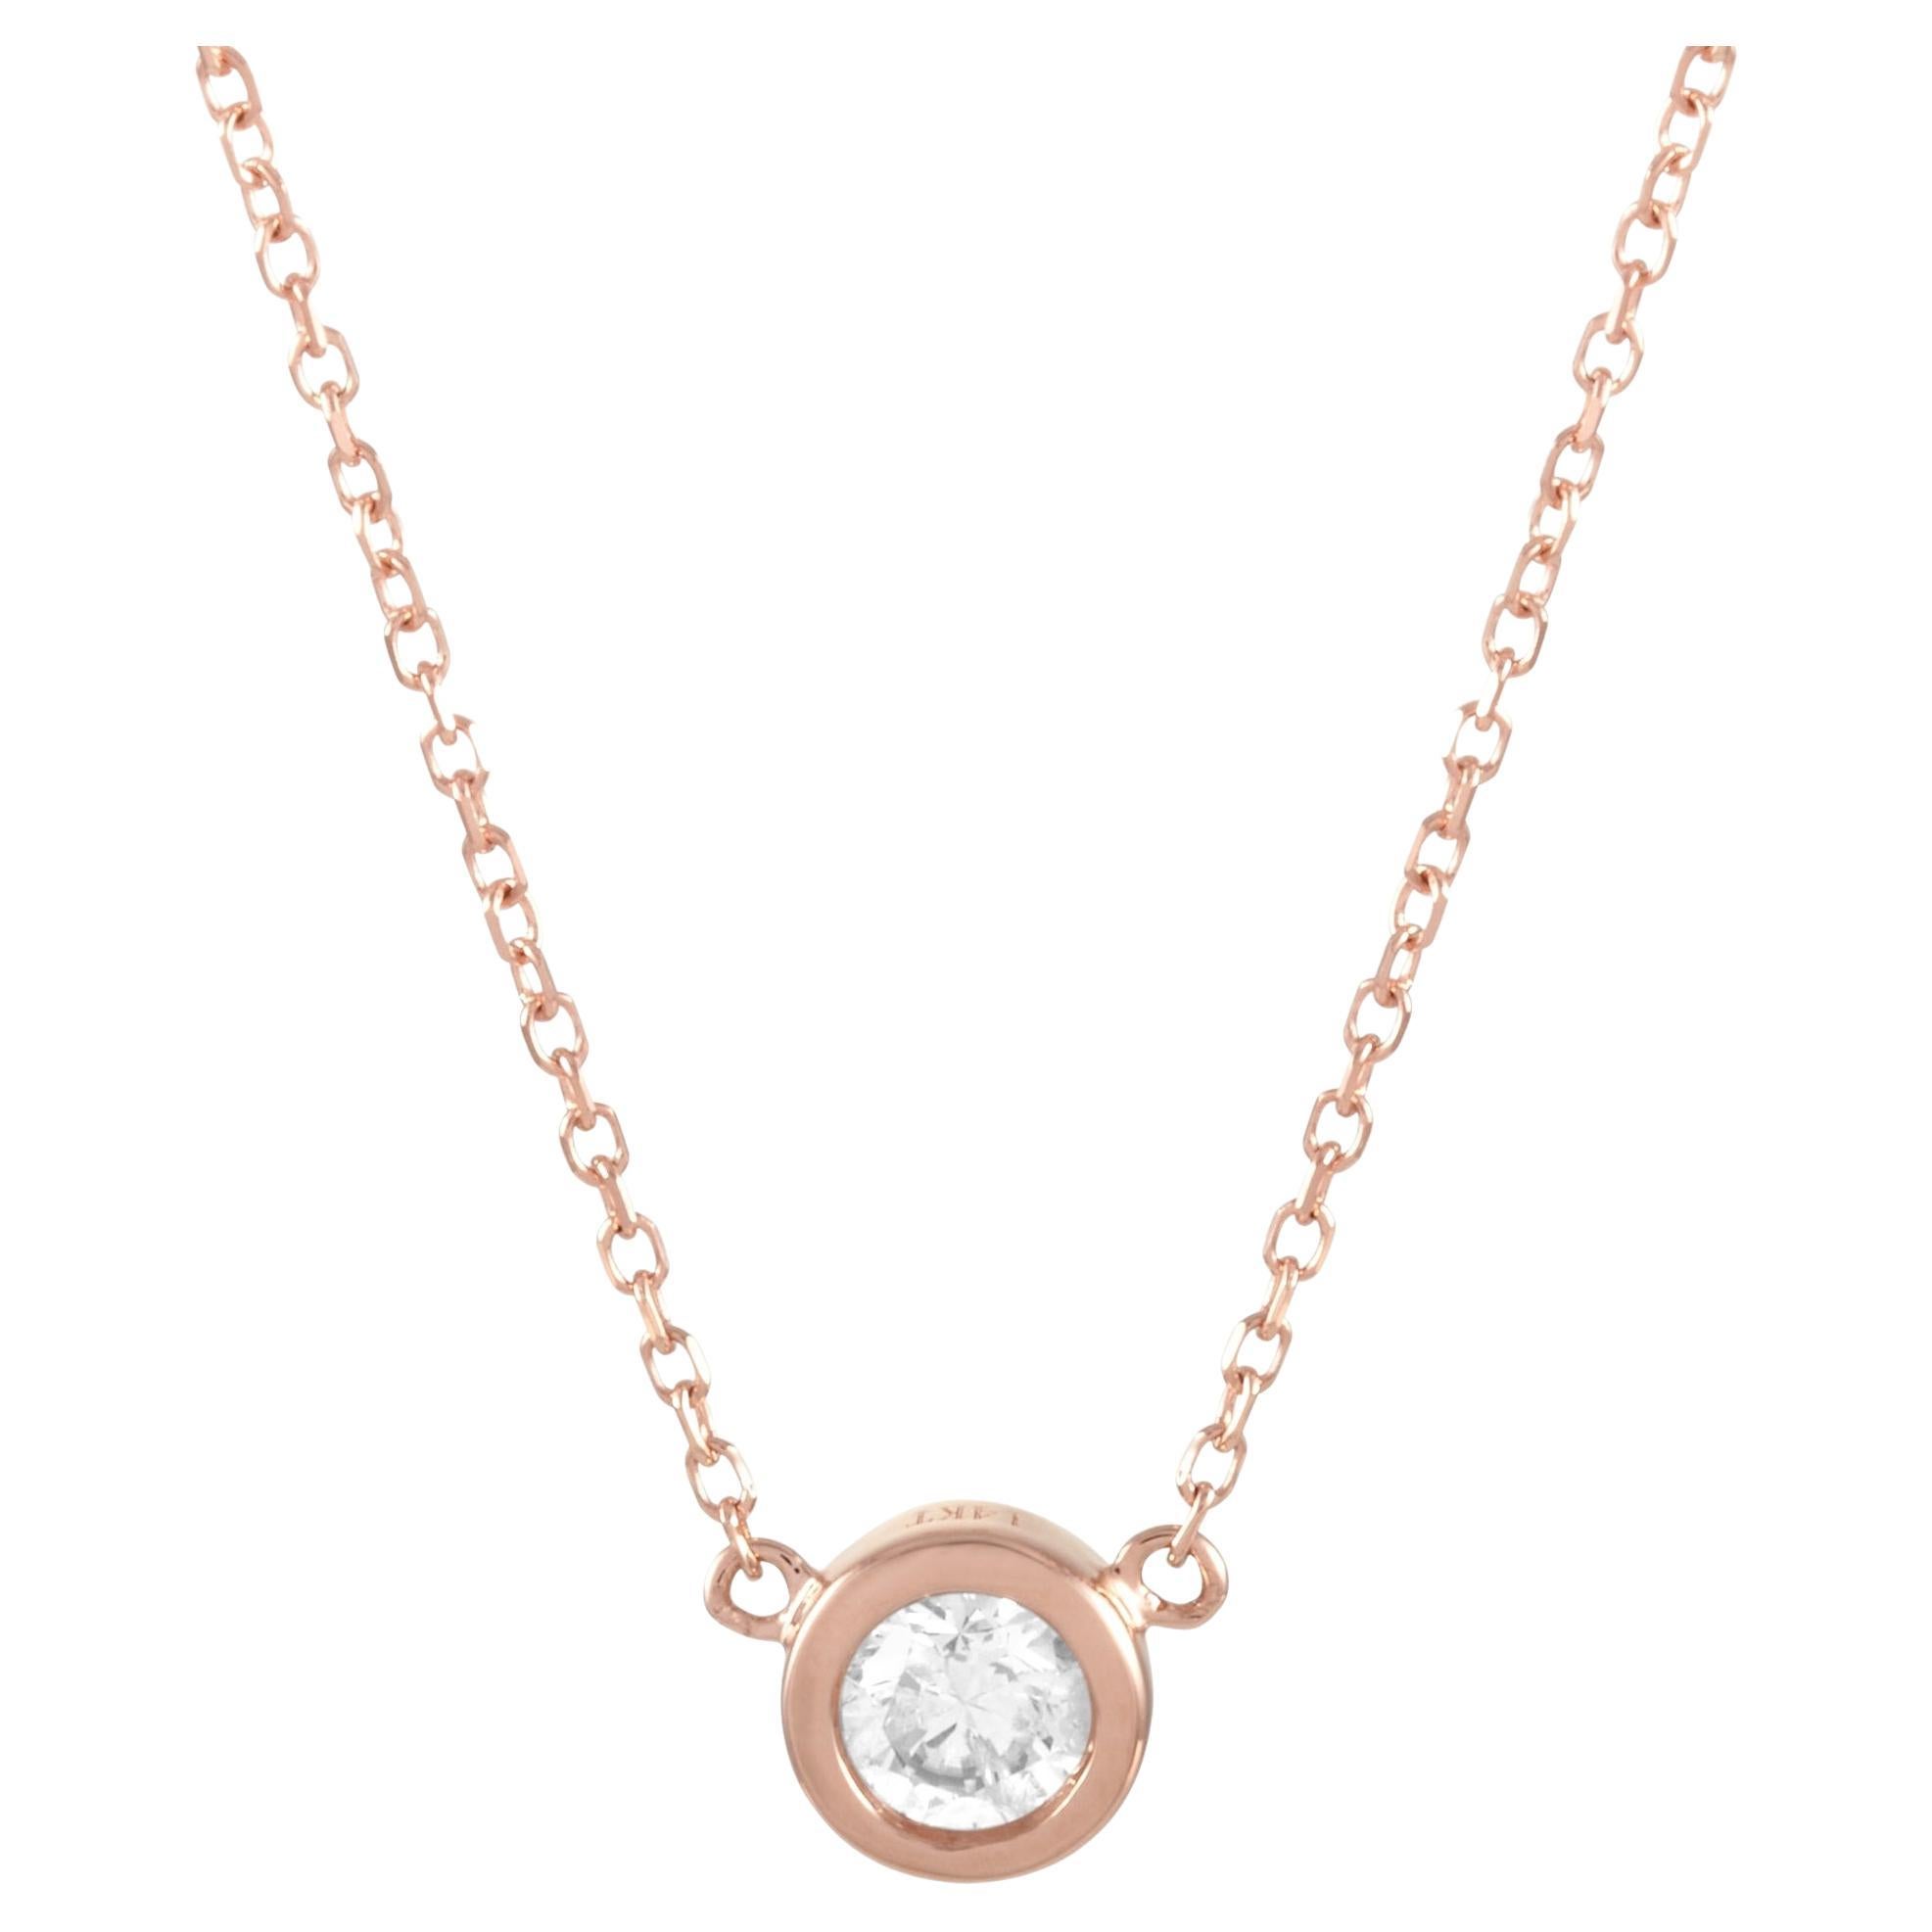 LB Exclusive 14K Rose Gold 0.20 Ct Diamond Pendant Necklace For Sale